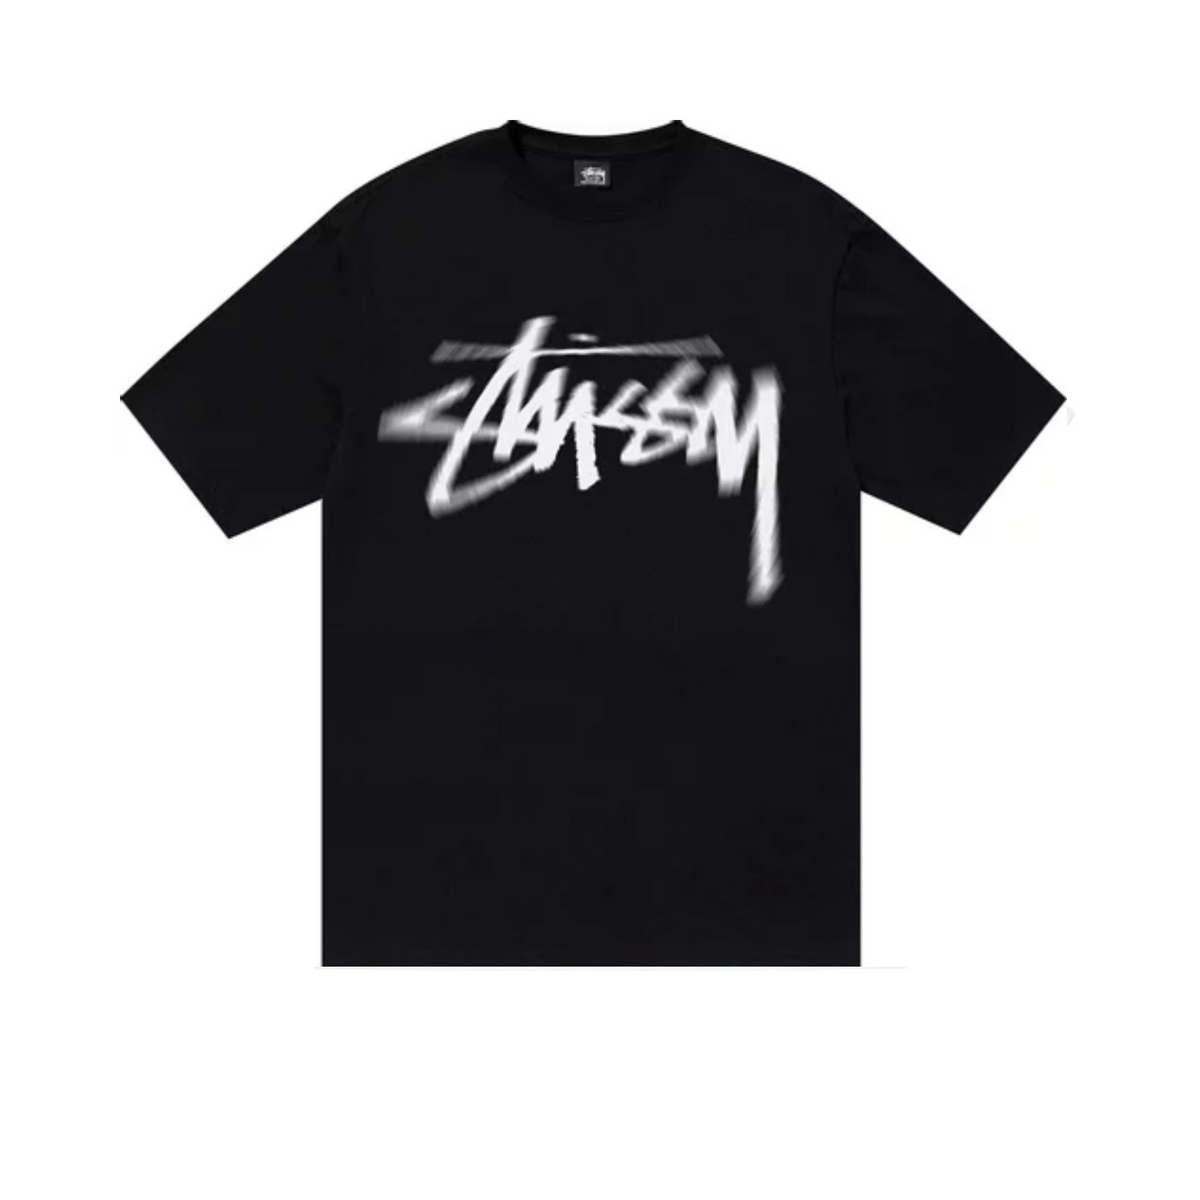 Stüssy Dizzy Stock t-shirt "Black"